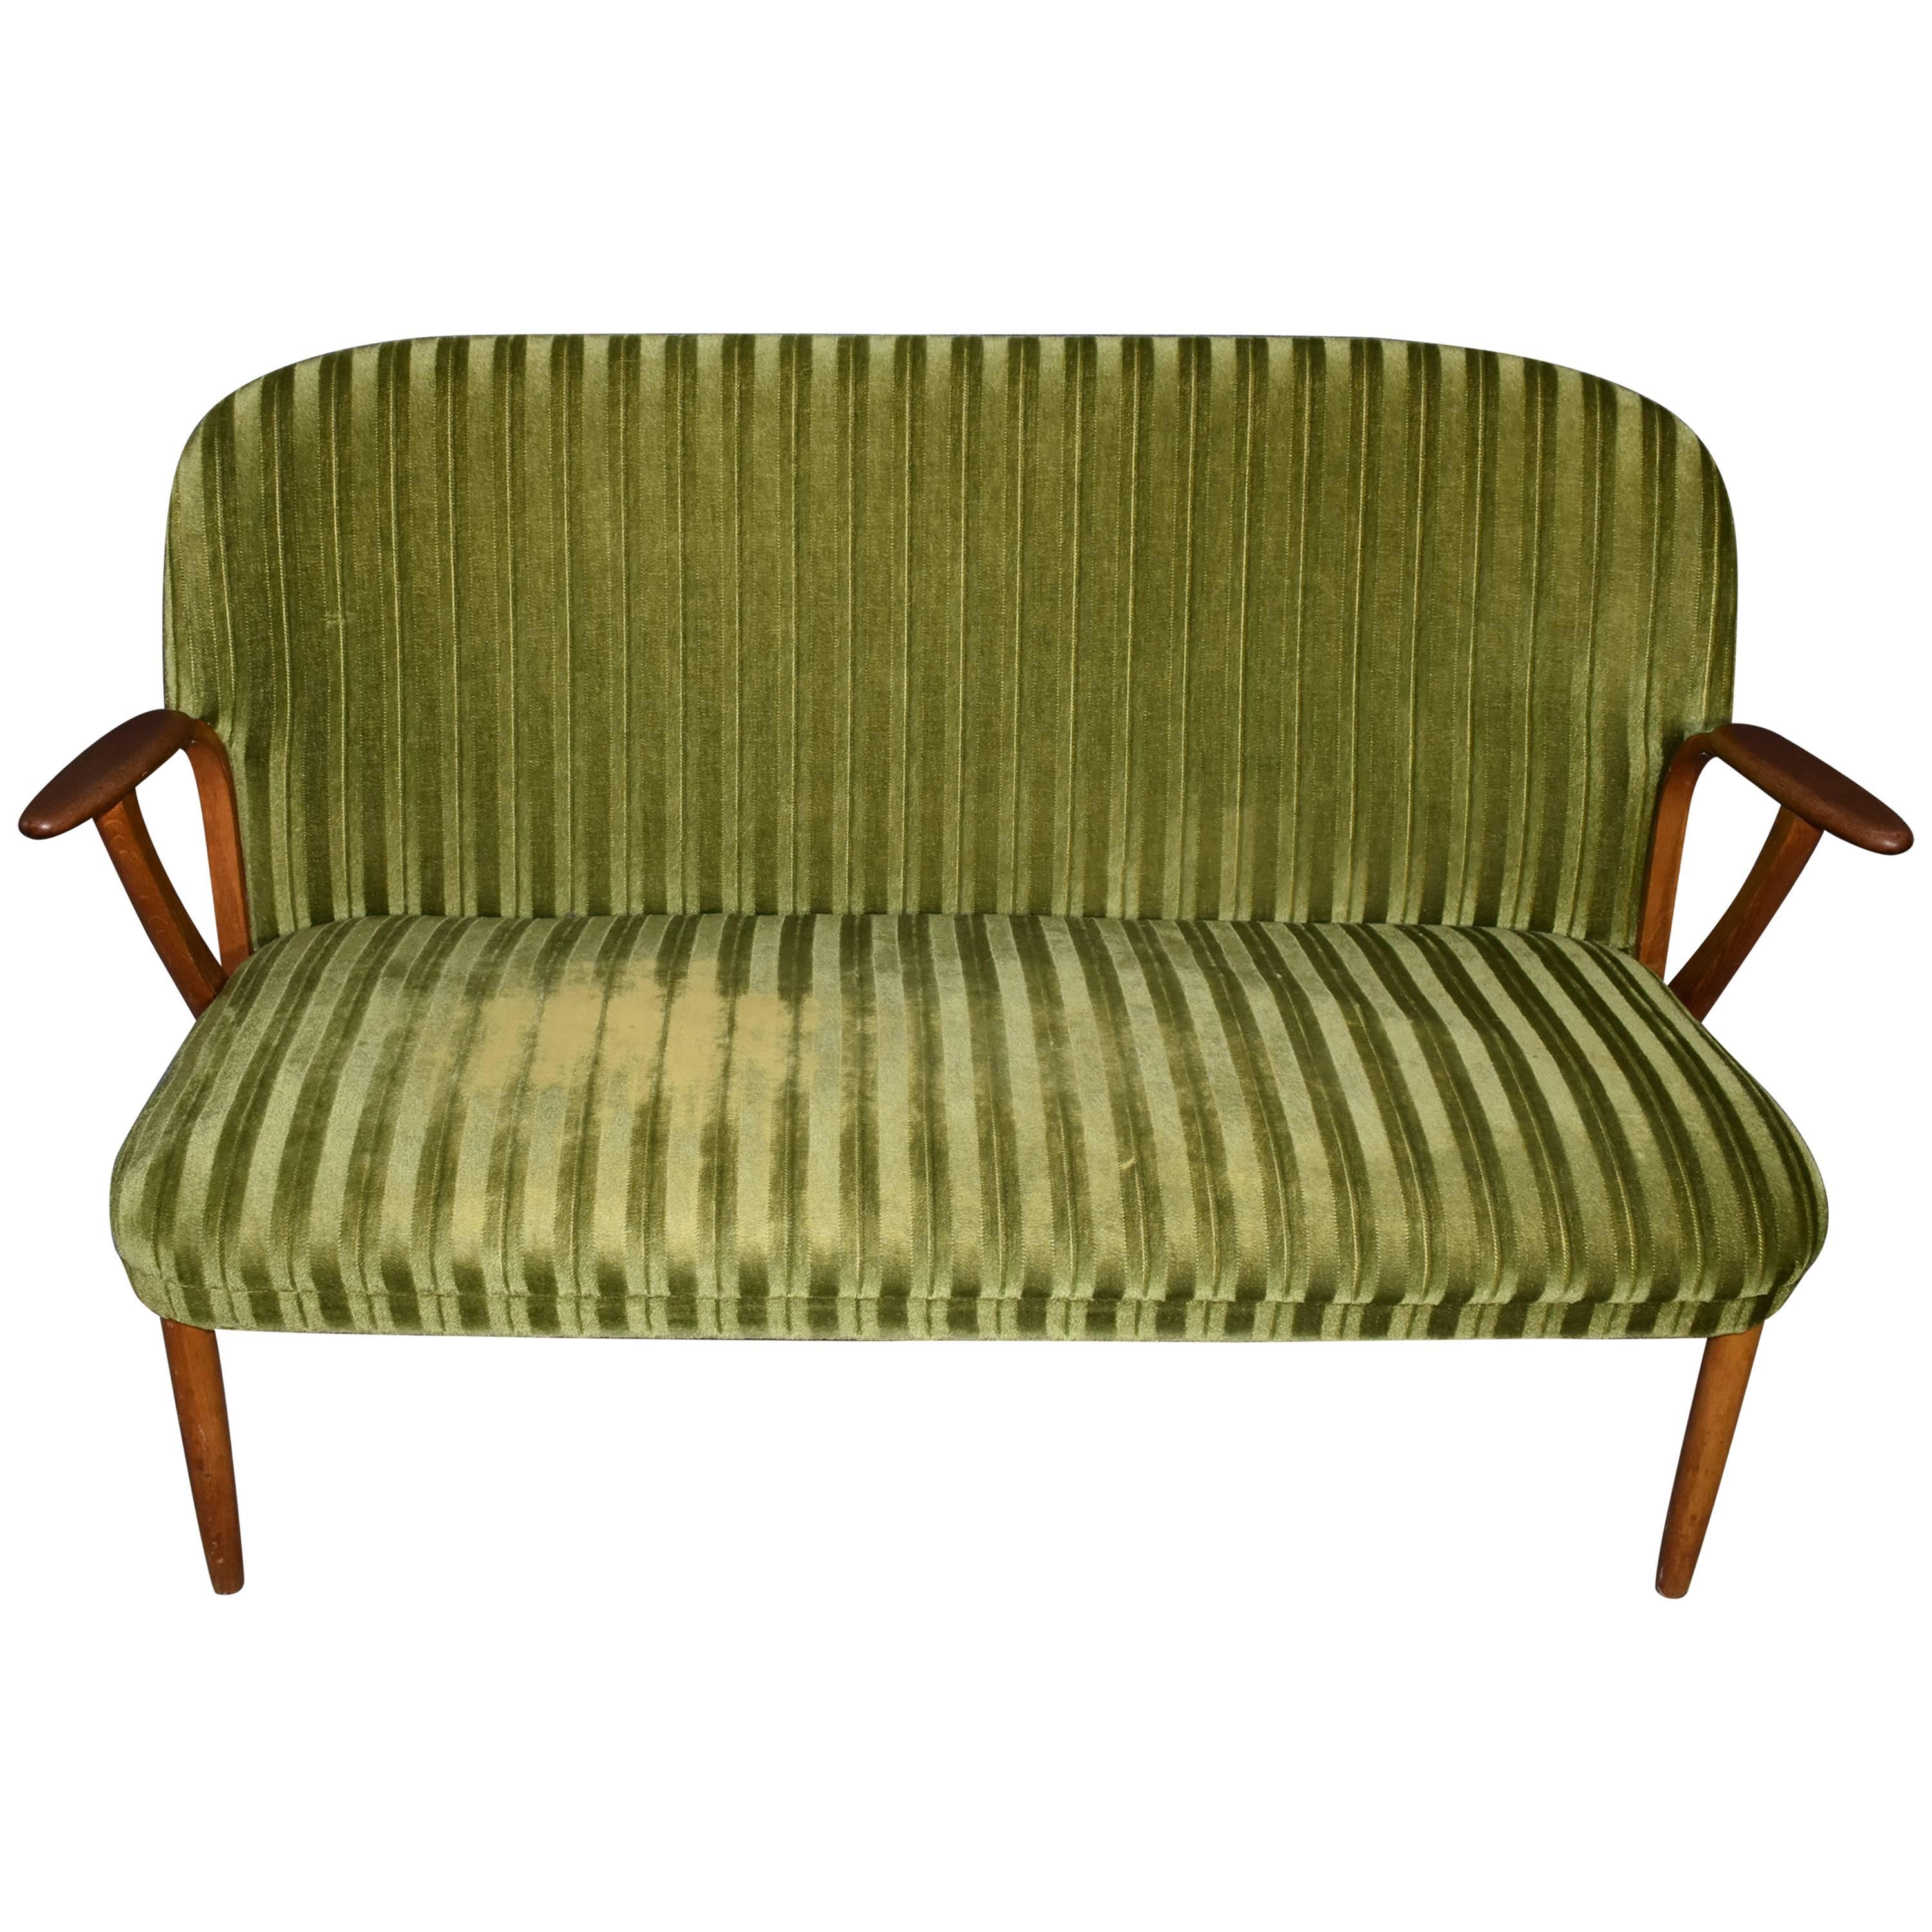 Two-Seat Danish Mid-Century Modern Green Teak Sofa For Sale